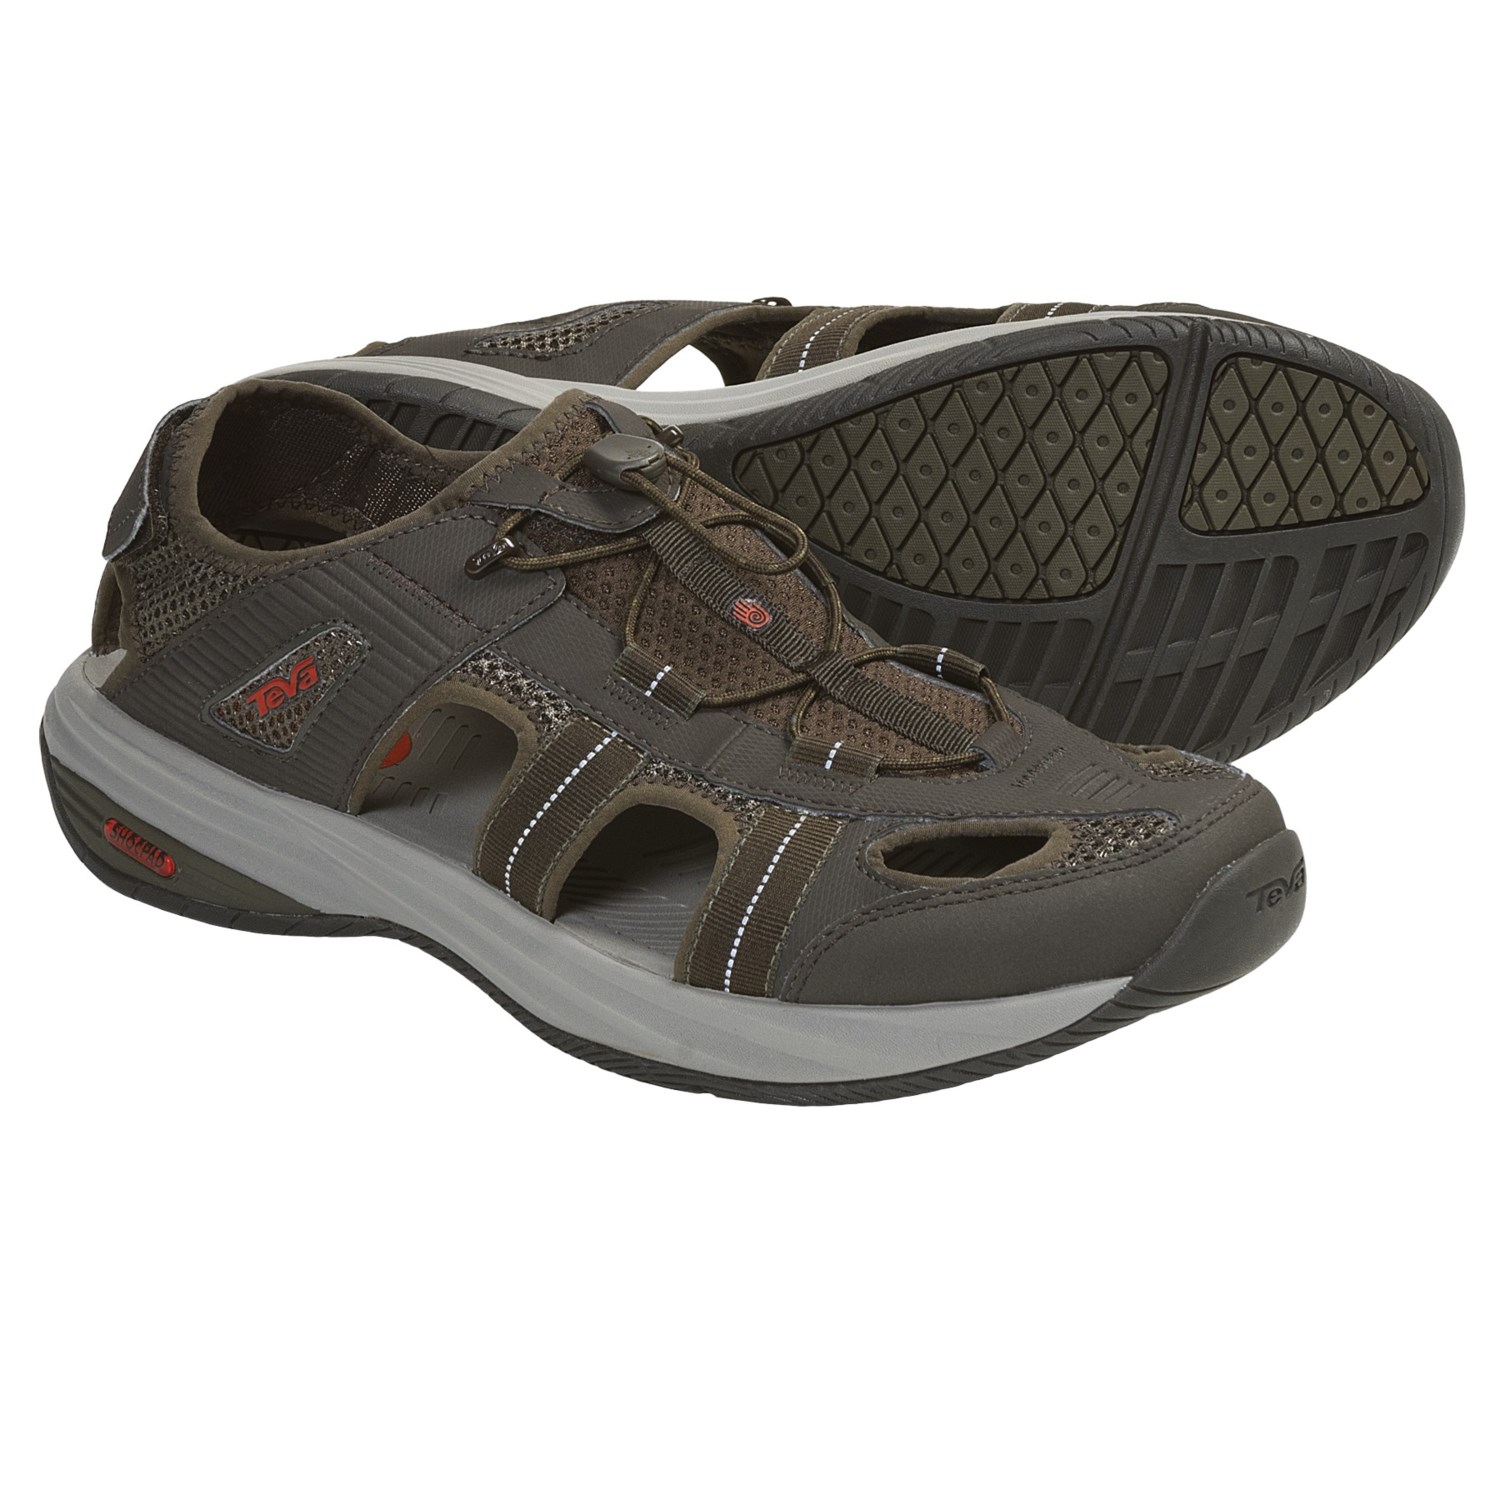 Teva Churnium Sport Sandals (For Men) - Save 75%